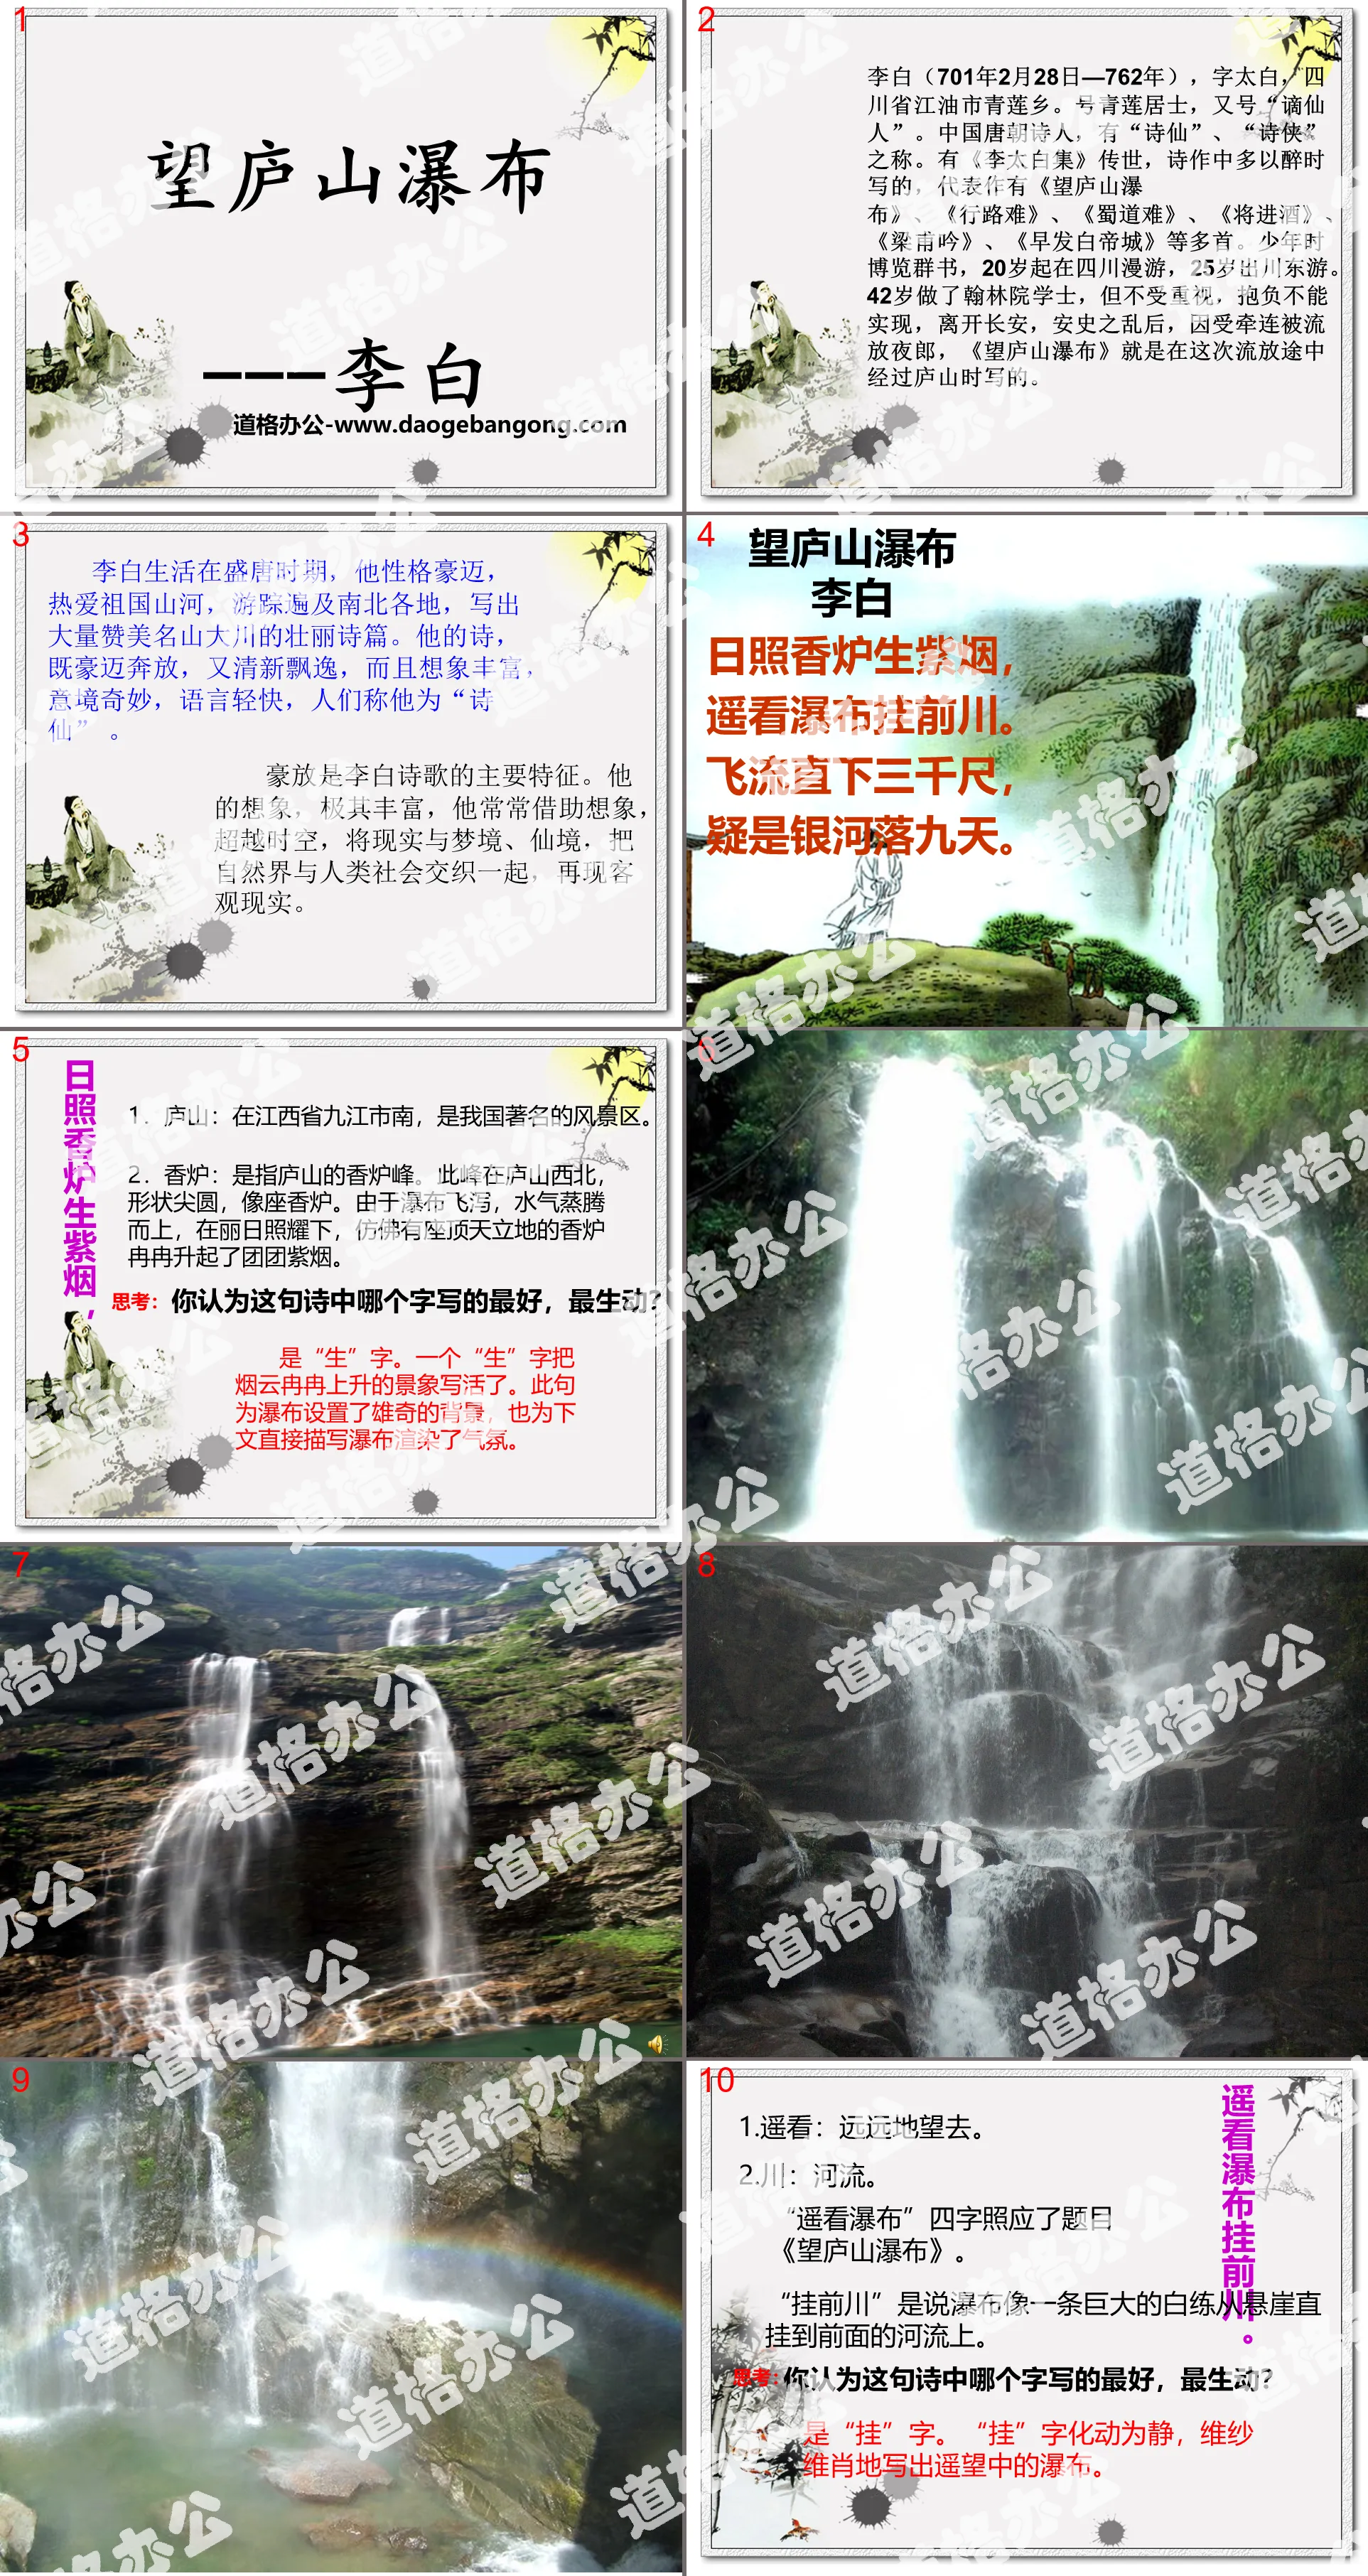 "Wanglushan Waterfall" PPT courseware 15